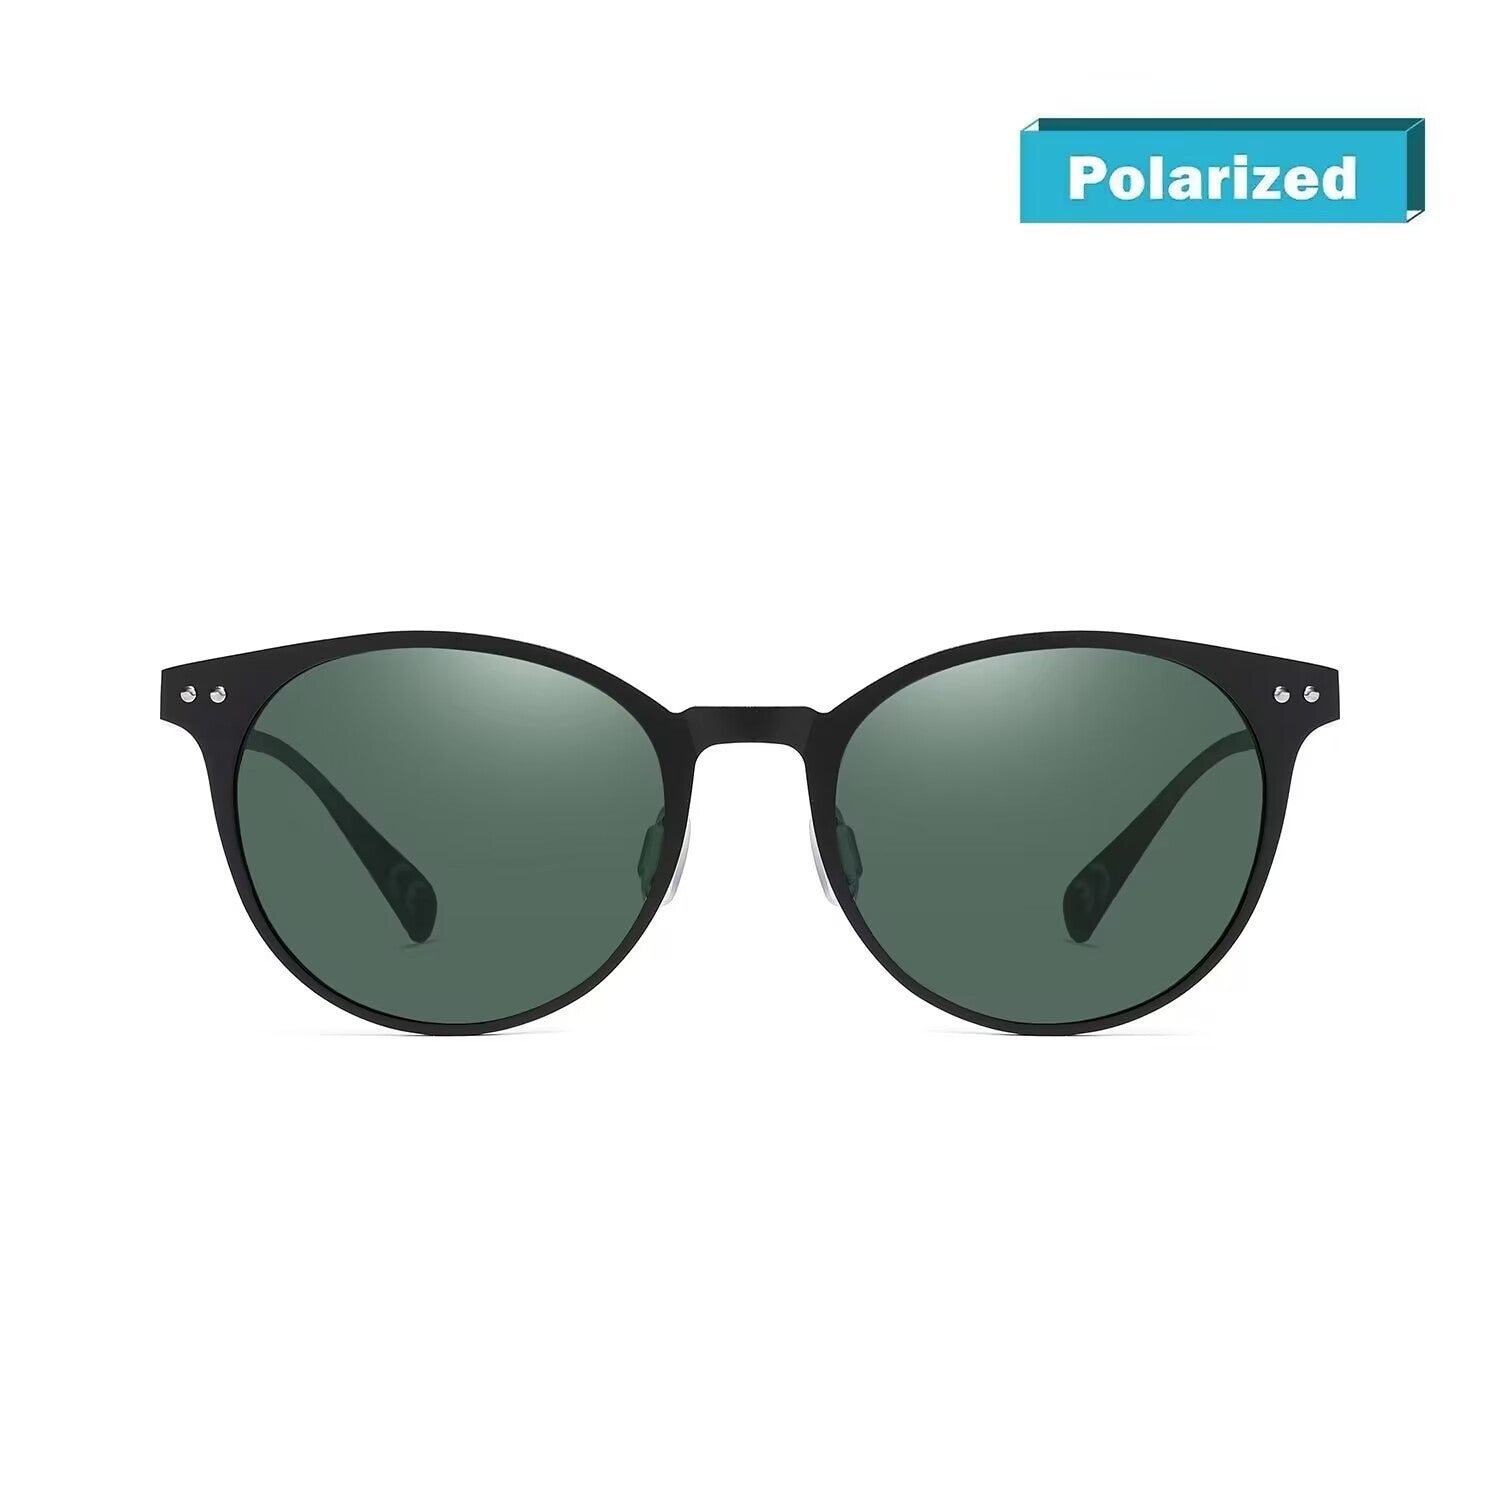 DUCO Polarized Sunglasses Men and Women, Ultra Lightweight Al-mg Sports Sun Glasses Driving Fishing UV400 Shades DC3019